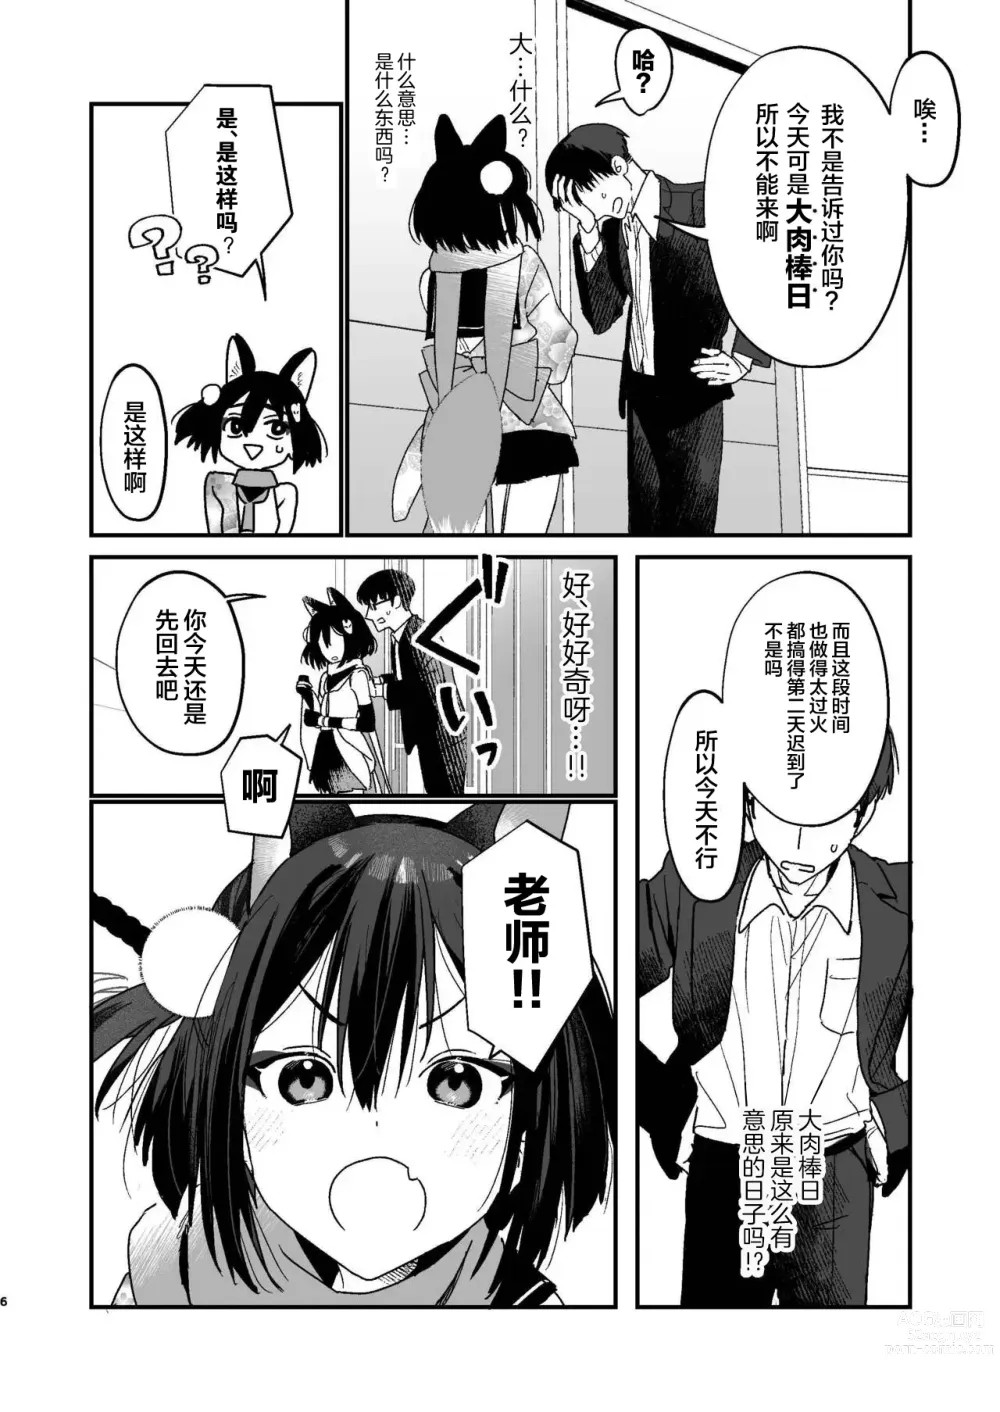 Page 5 of doujinshi 泉奈與小滿的誘惑忍法